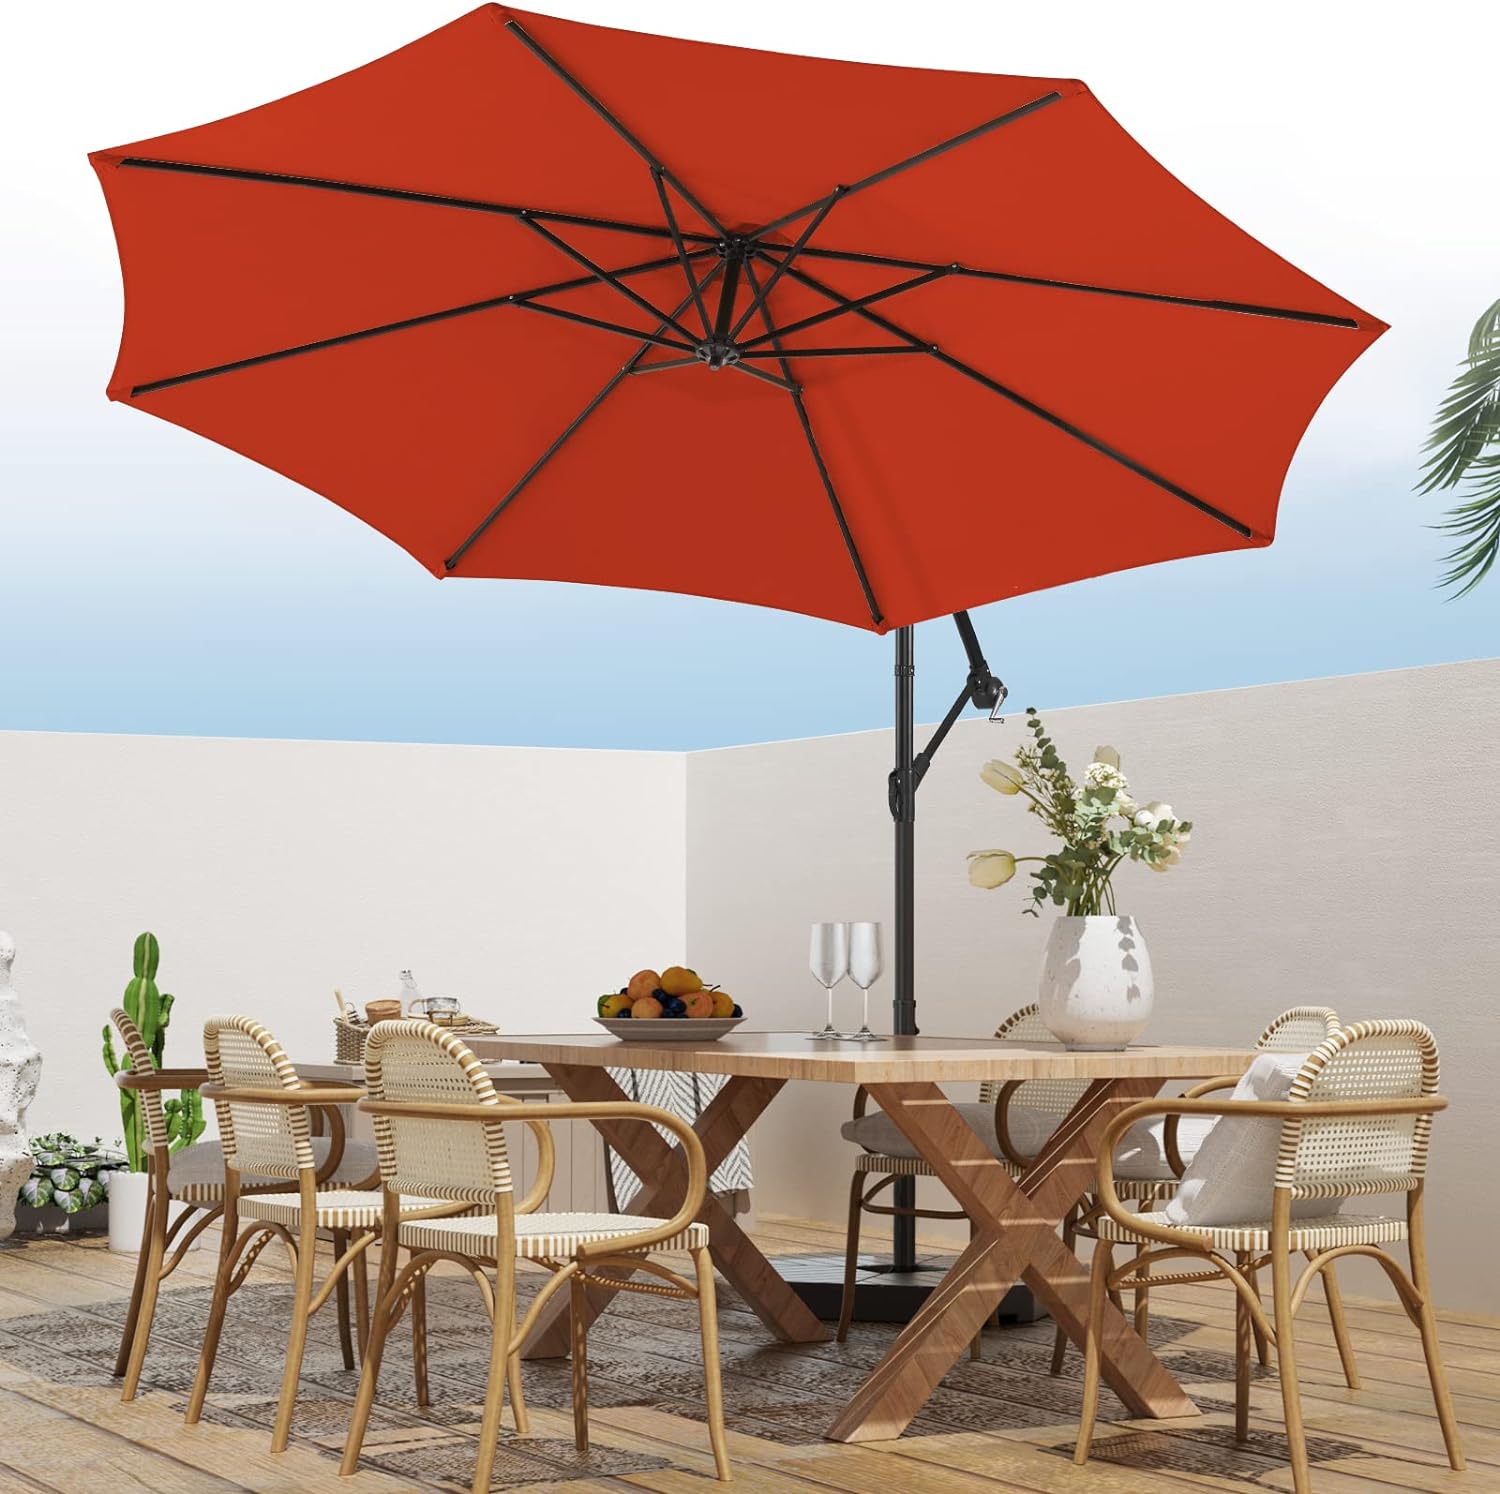 wikiwiki 10ft Patio Umbrellas Offset Outdoor Umbrella Cantilever hanging Umbrellas w/Infinite Tilt, Fade Resistant Waterproof RECYCLED FABRIC Canopy & Cross Base, for Yard, Garden & Deck (Grenadine Orange)